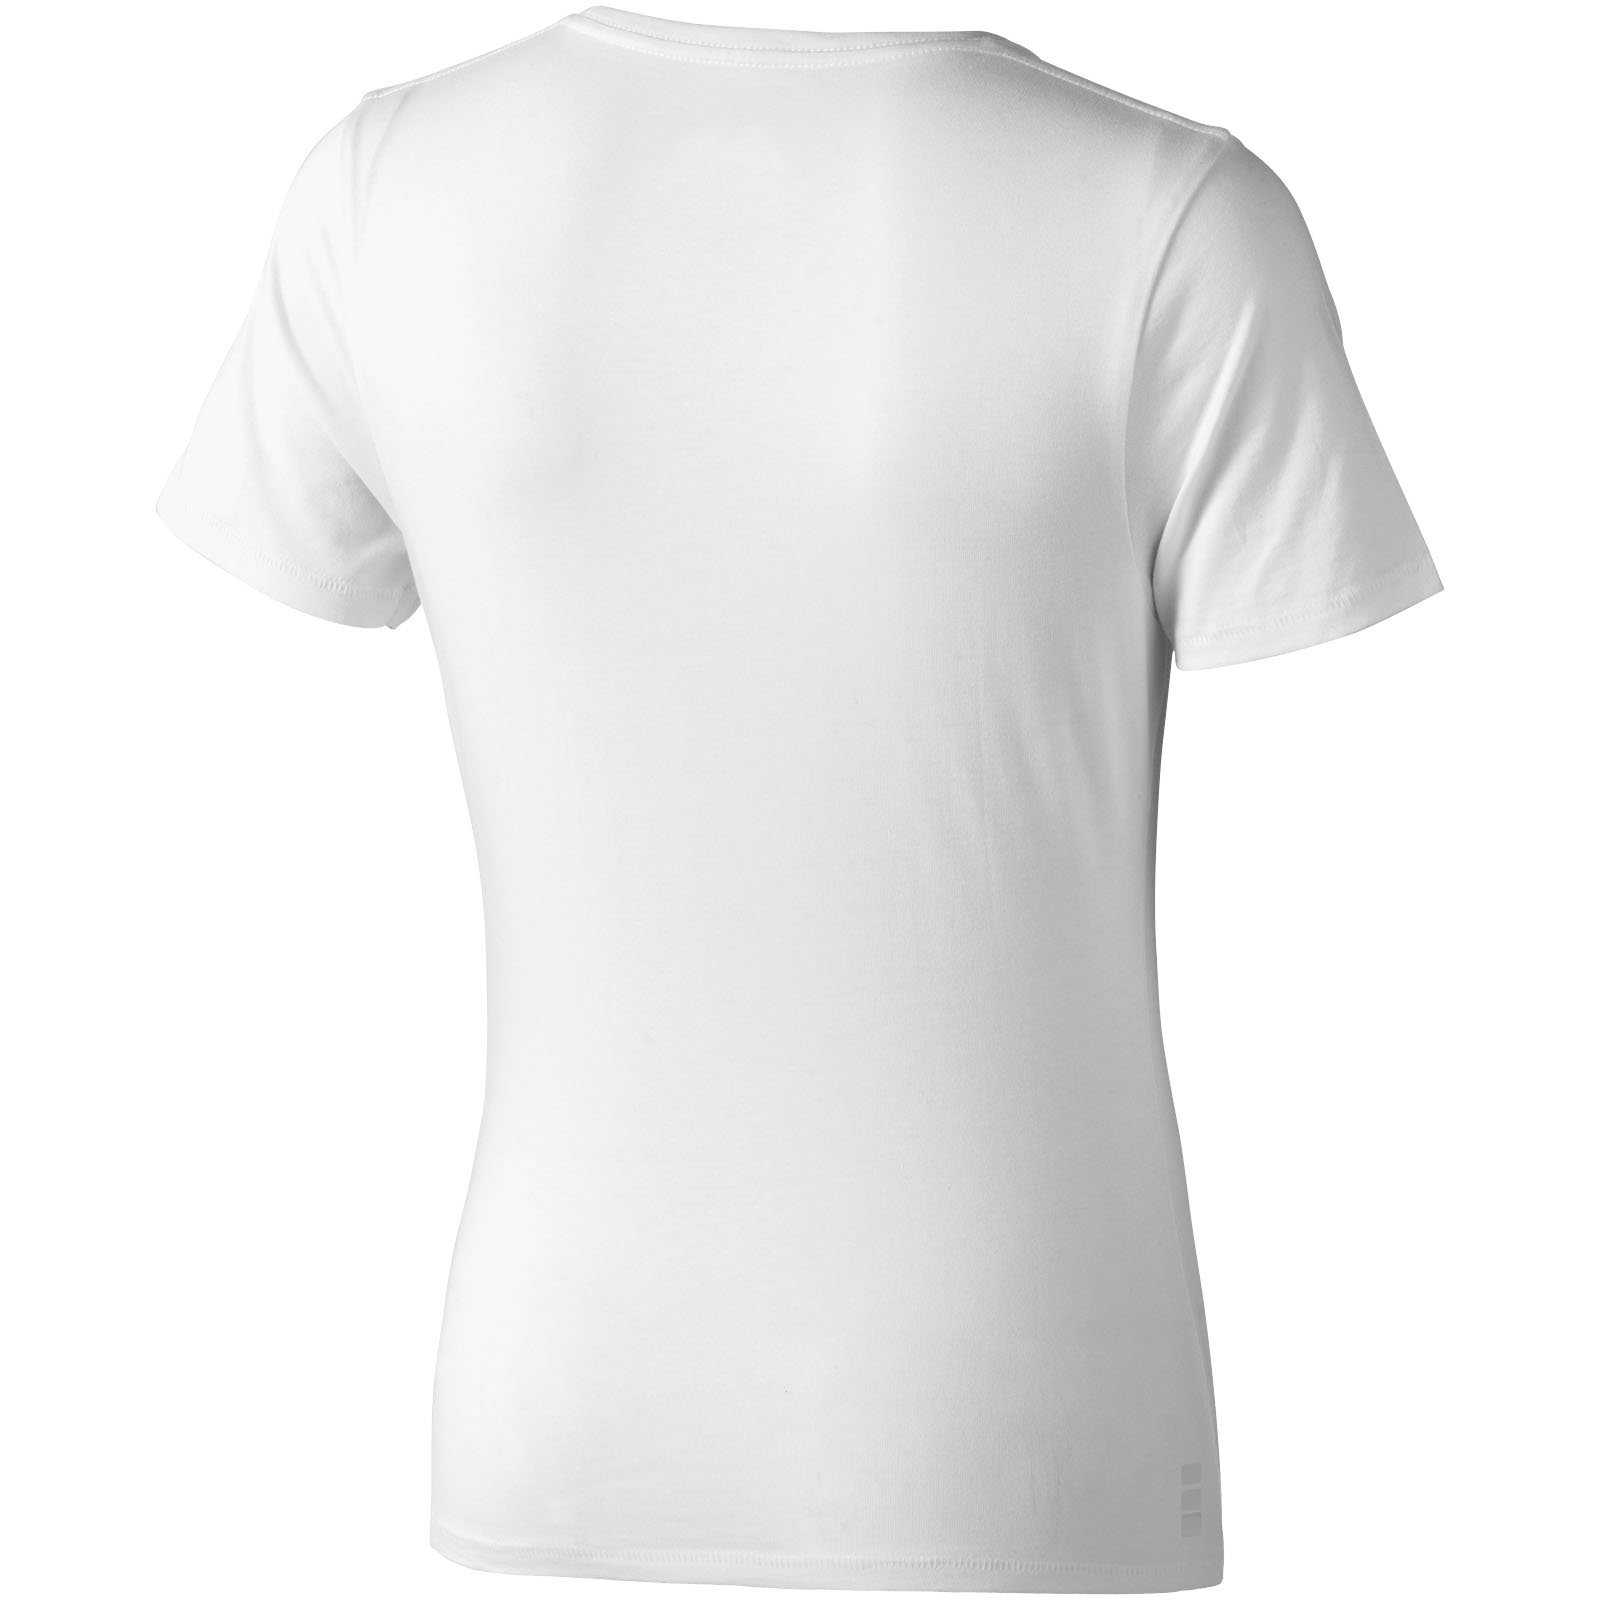 Advertising T-shirts - Nanaimo short sleeve women's t-shirt - 2